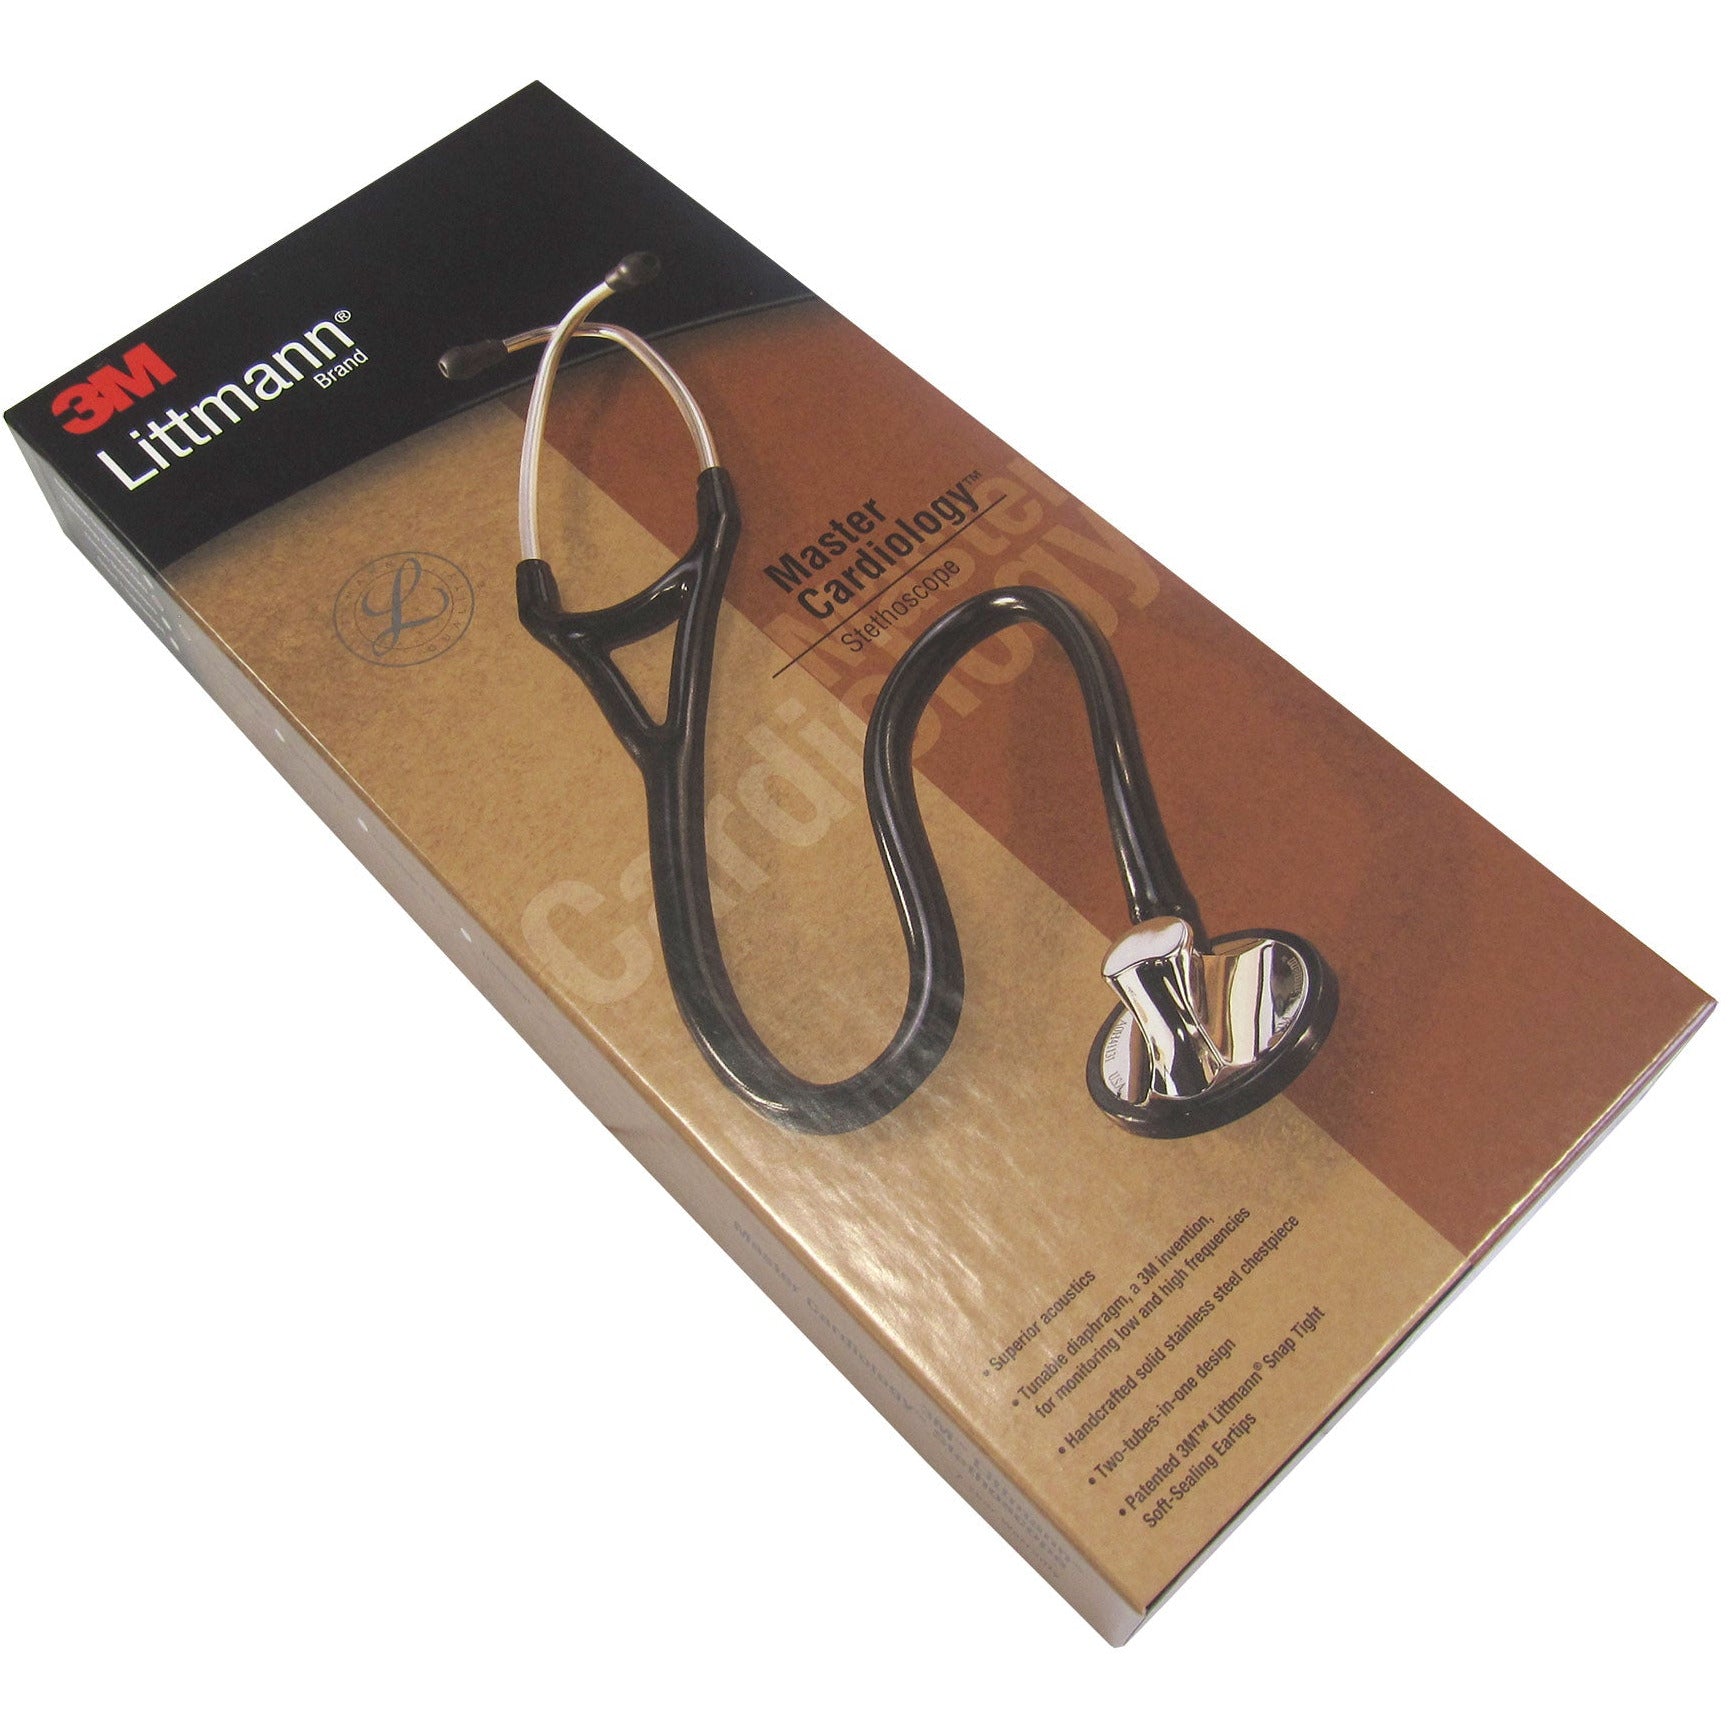 Littmann Master Cardiology Stethoscope: All Black 2161 - Student Deal 3M Littmann